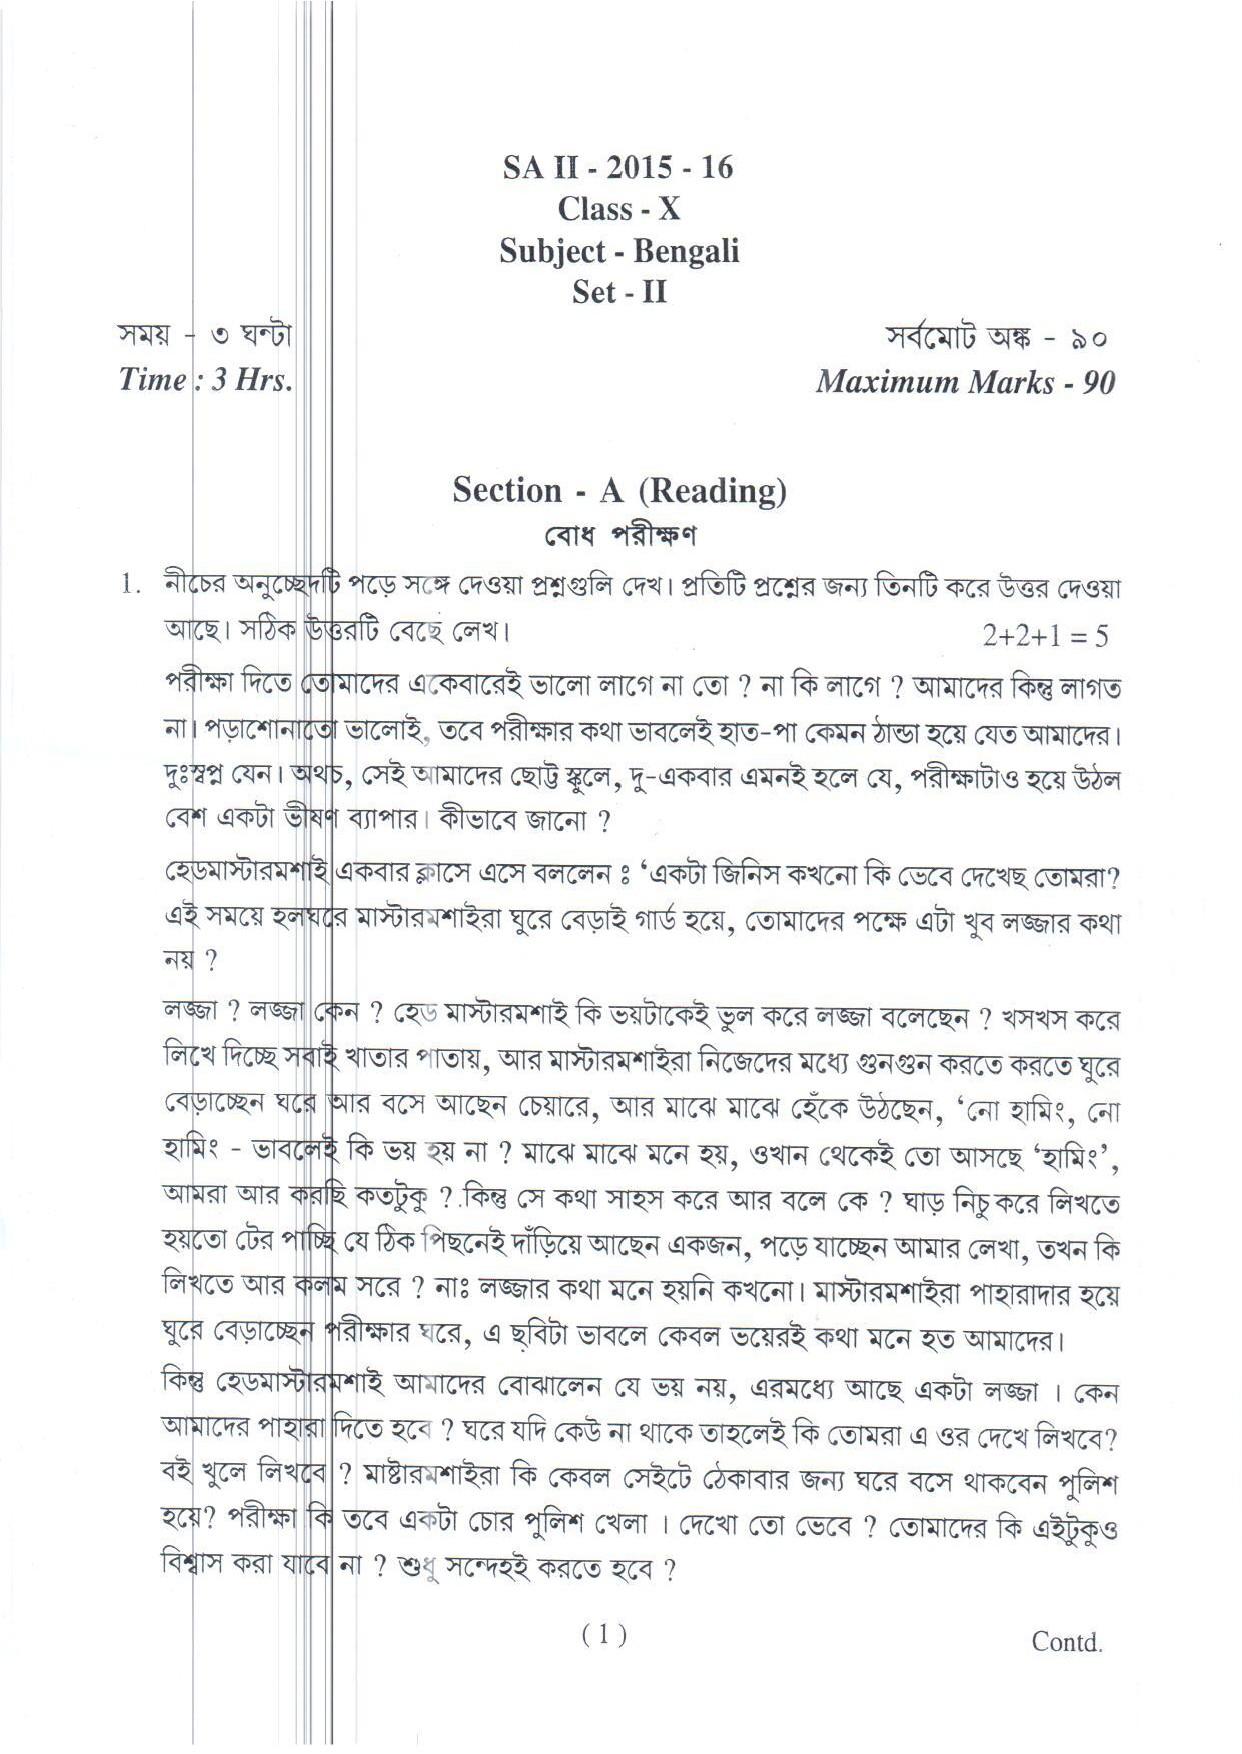 Bengali CBSE Class X Sample Question Paper 2015 16 - Image 3